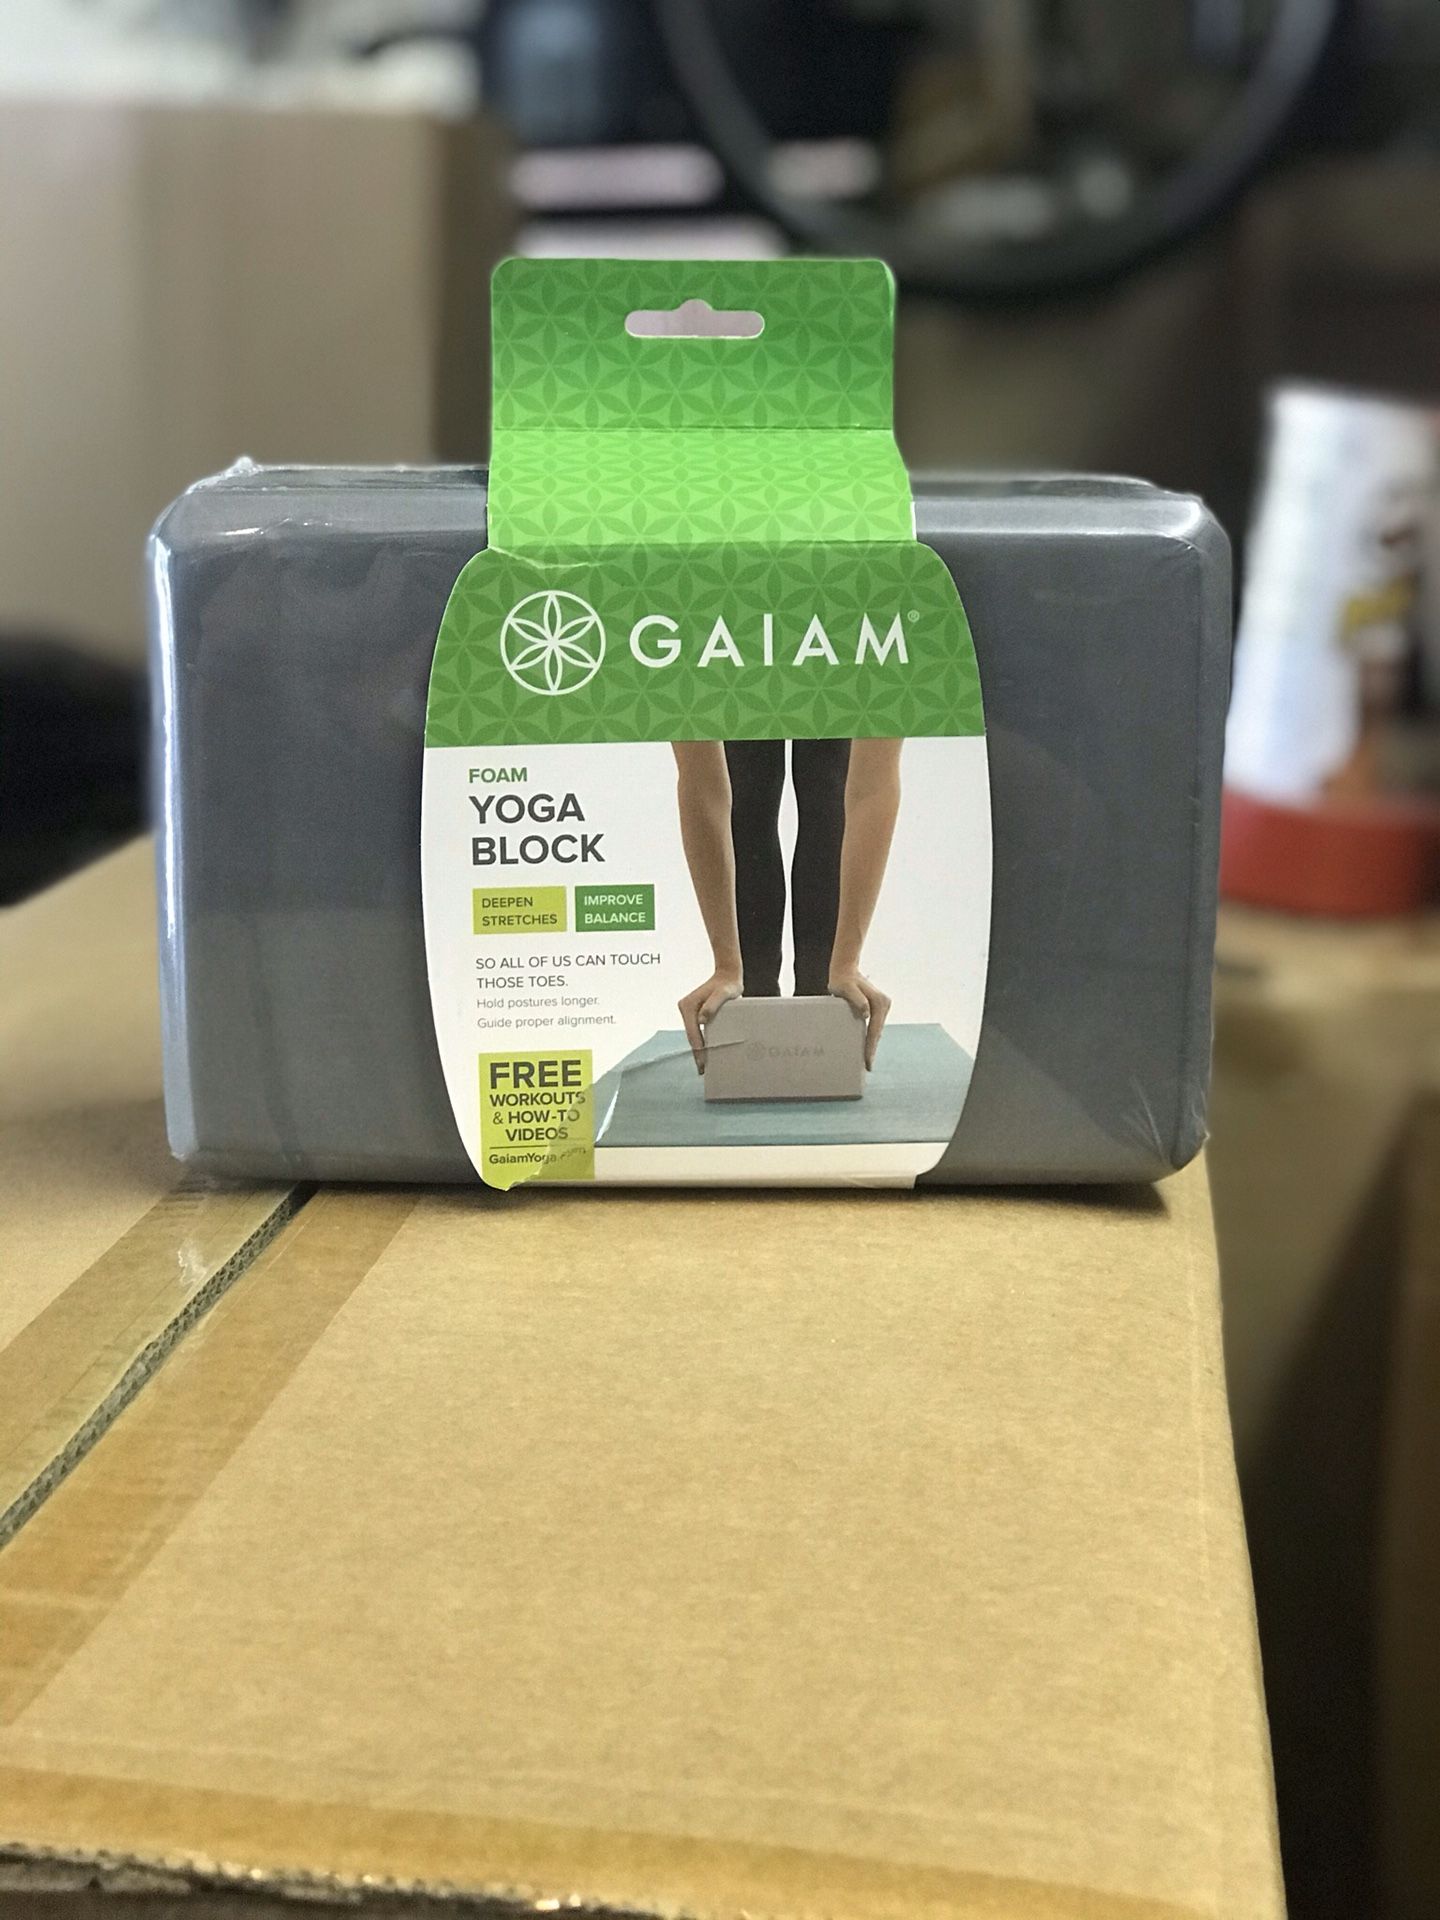 NEW - Gaiam Foam Yoga Block